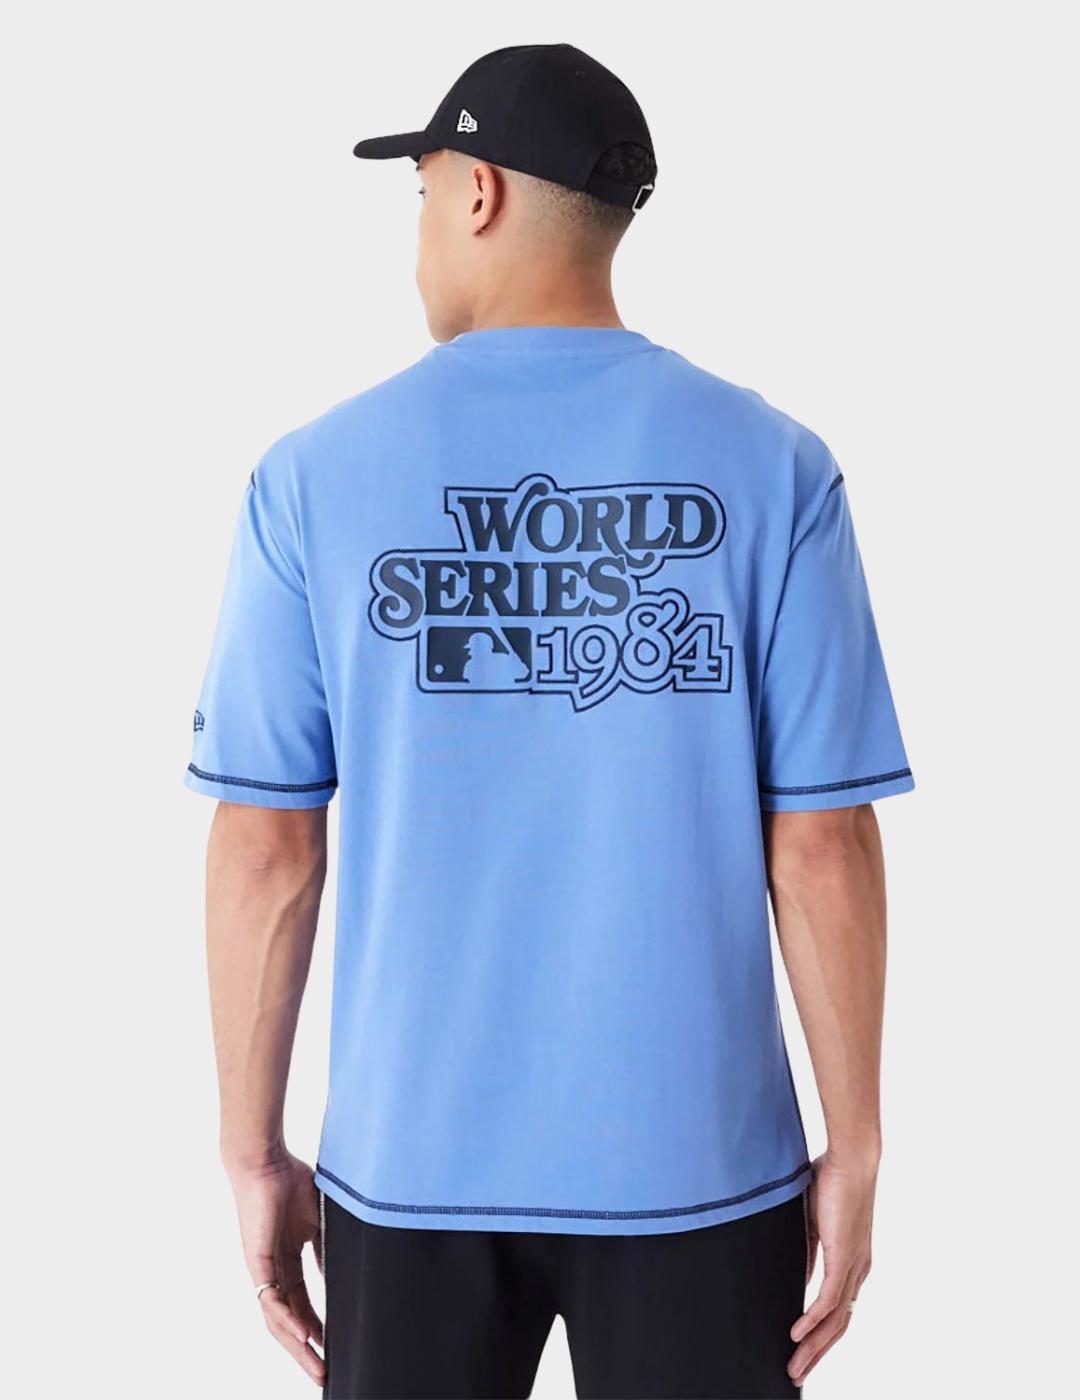 Camiseta New Era World Series azul hombre